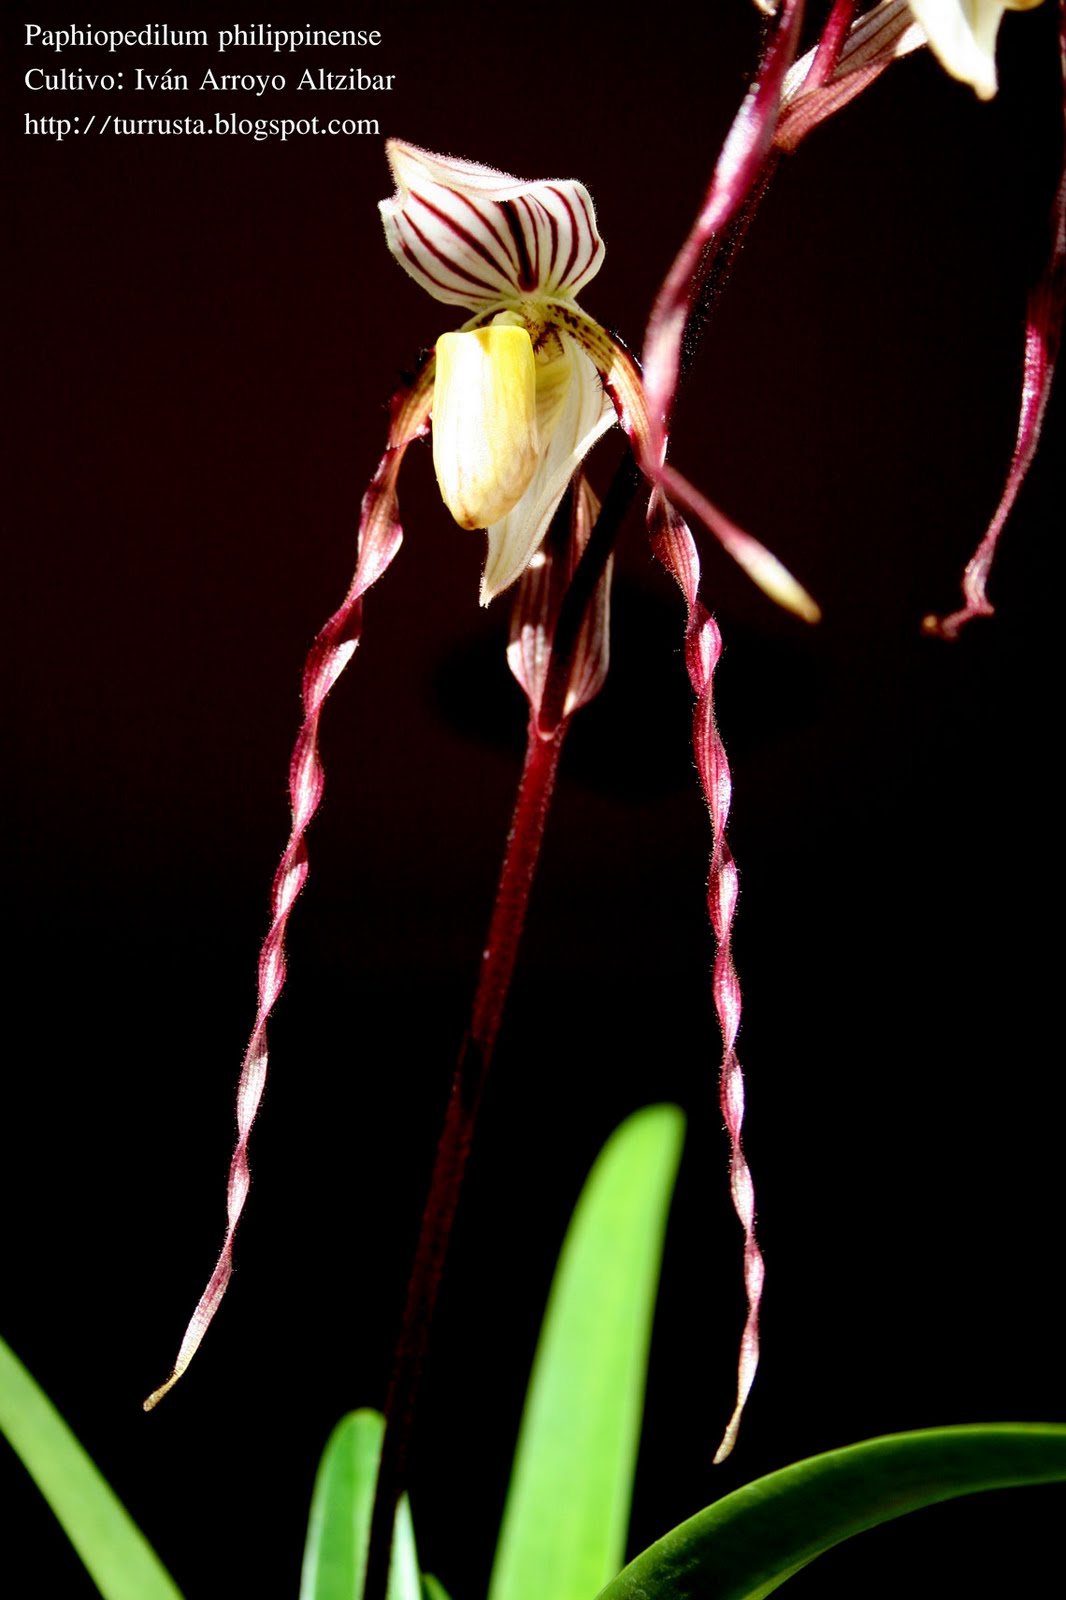 Las orquídeas de Iván Arroyo (Turrusta): Paphiopedilum [Paph.] philippinense